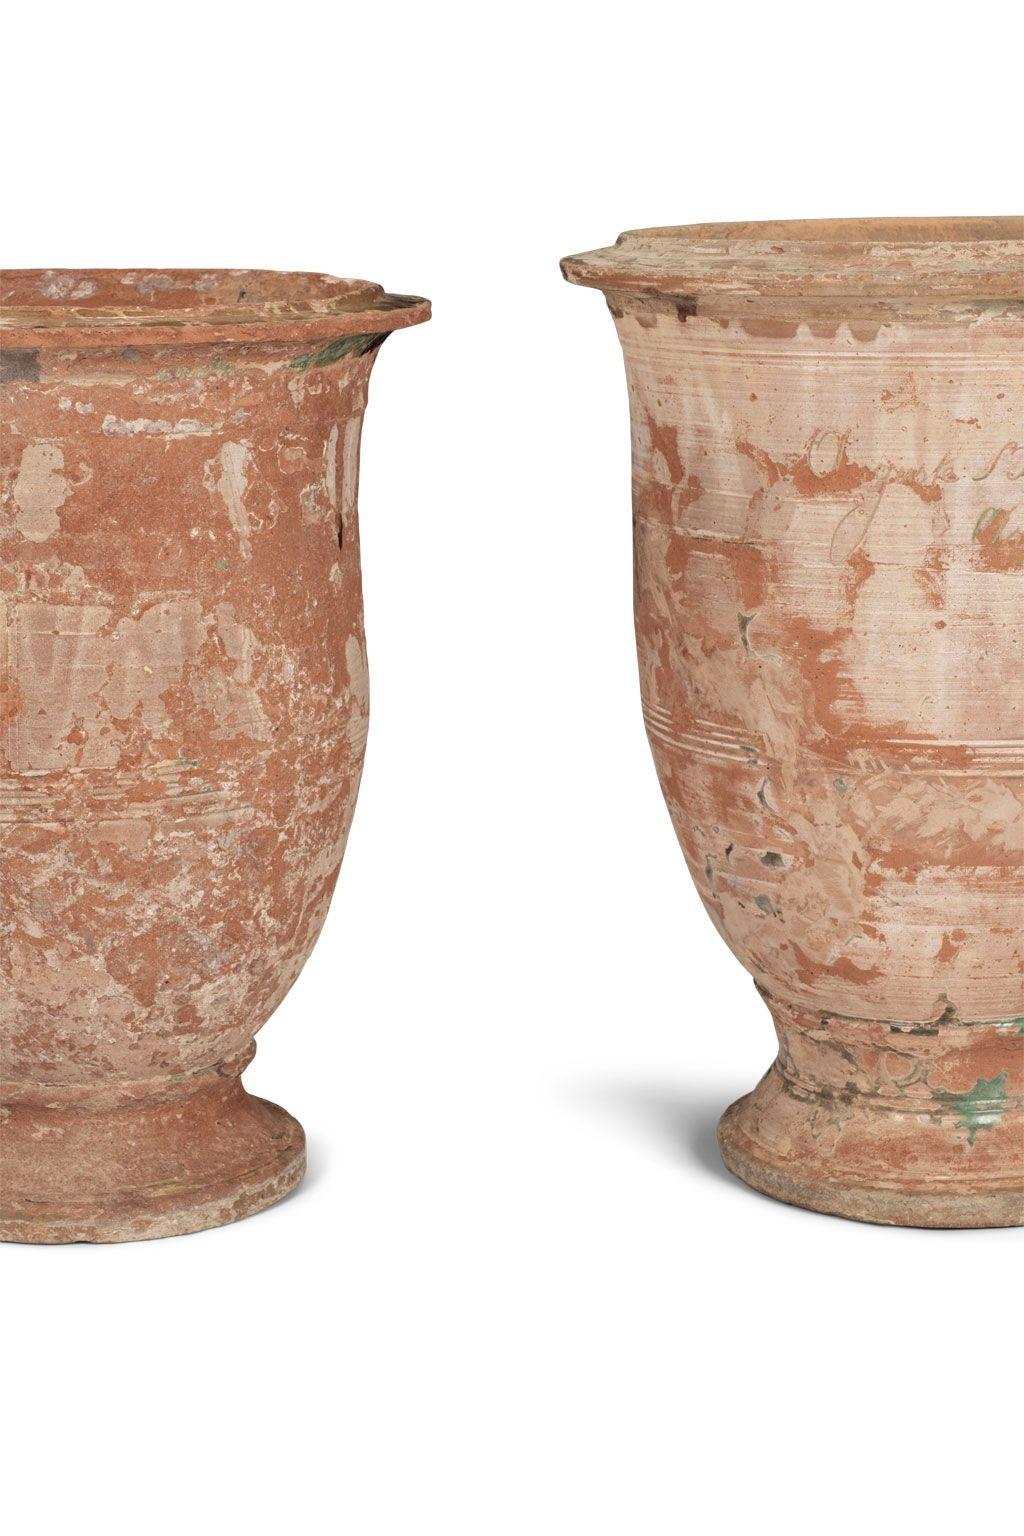 Stunning Anduze Jar circa 1820-1839 For Sale 2